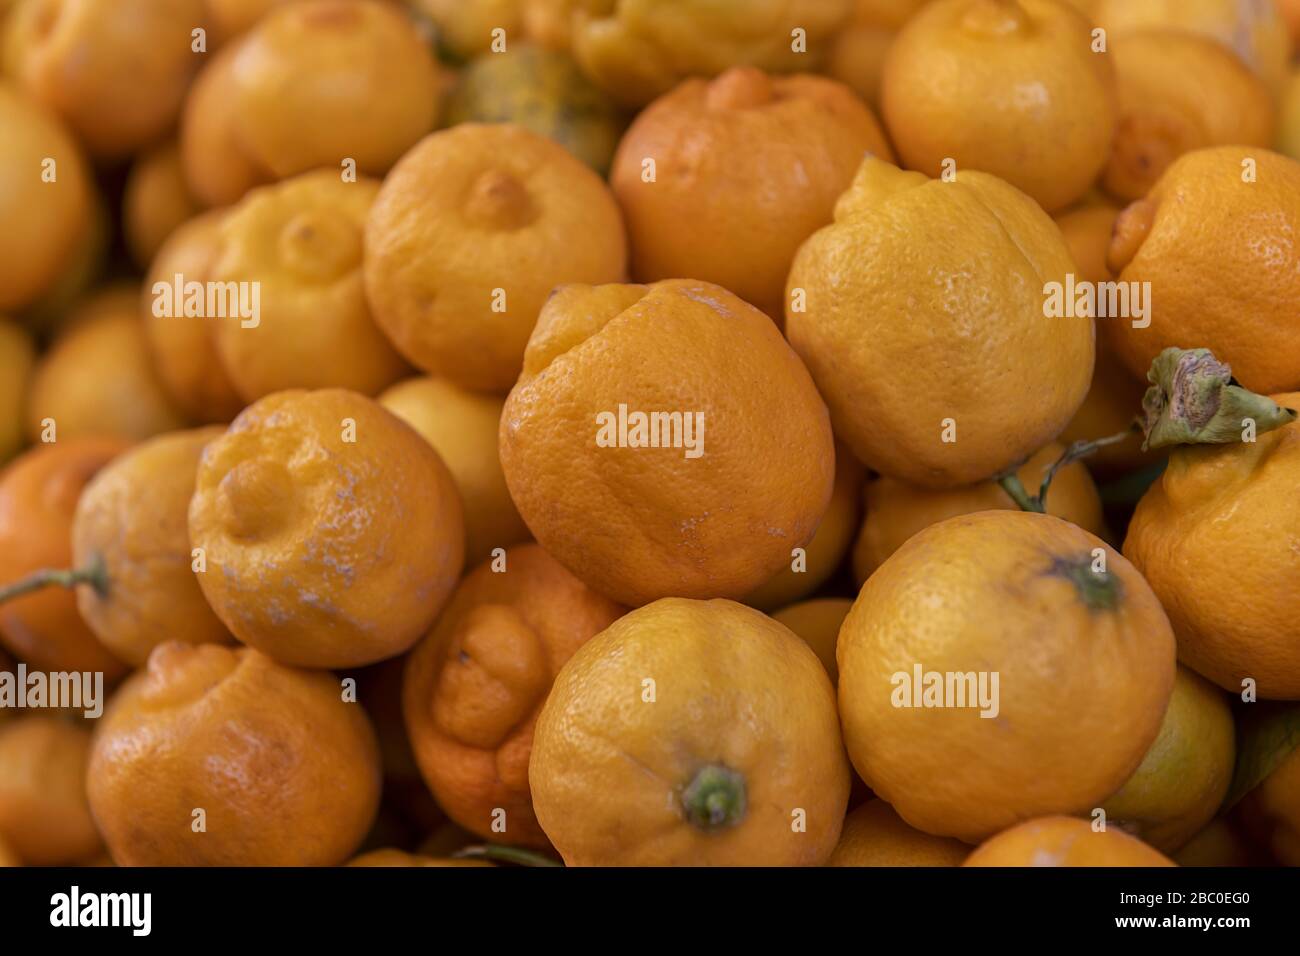 Fresh organic Moroccan lemon at a farmers market. Gastronomic speciality. Stock Photo